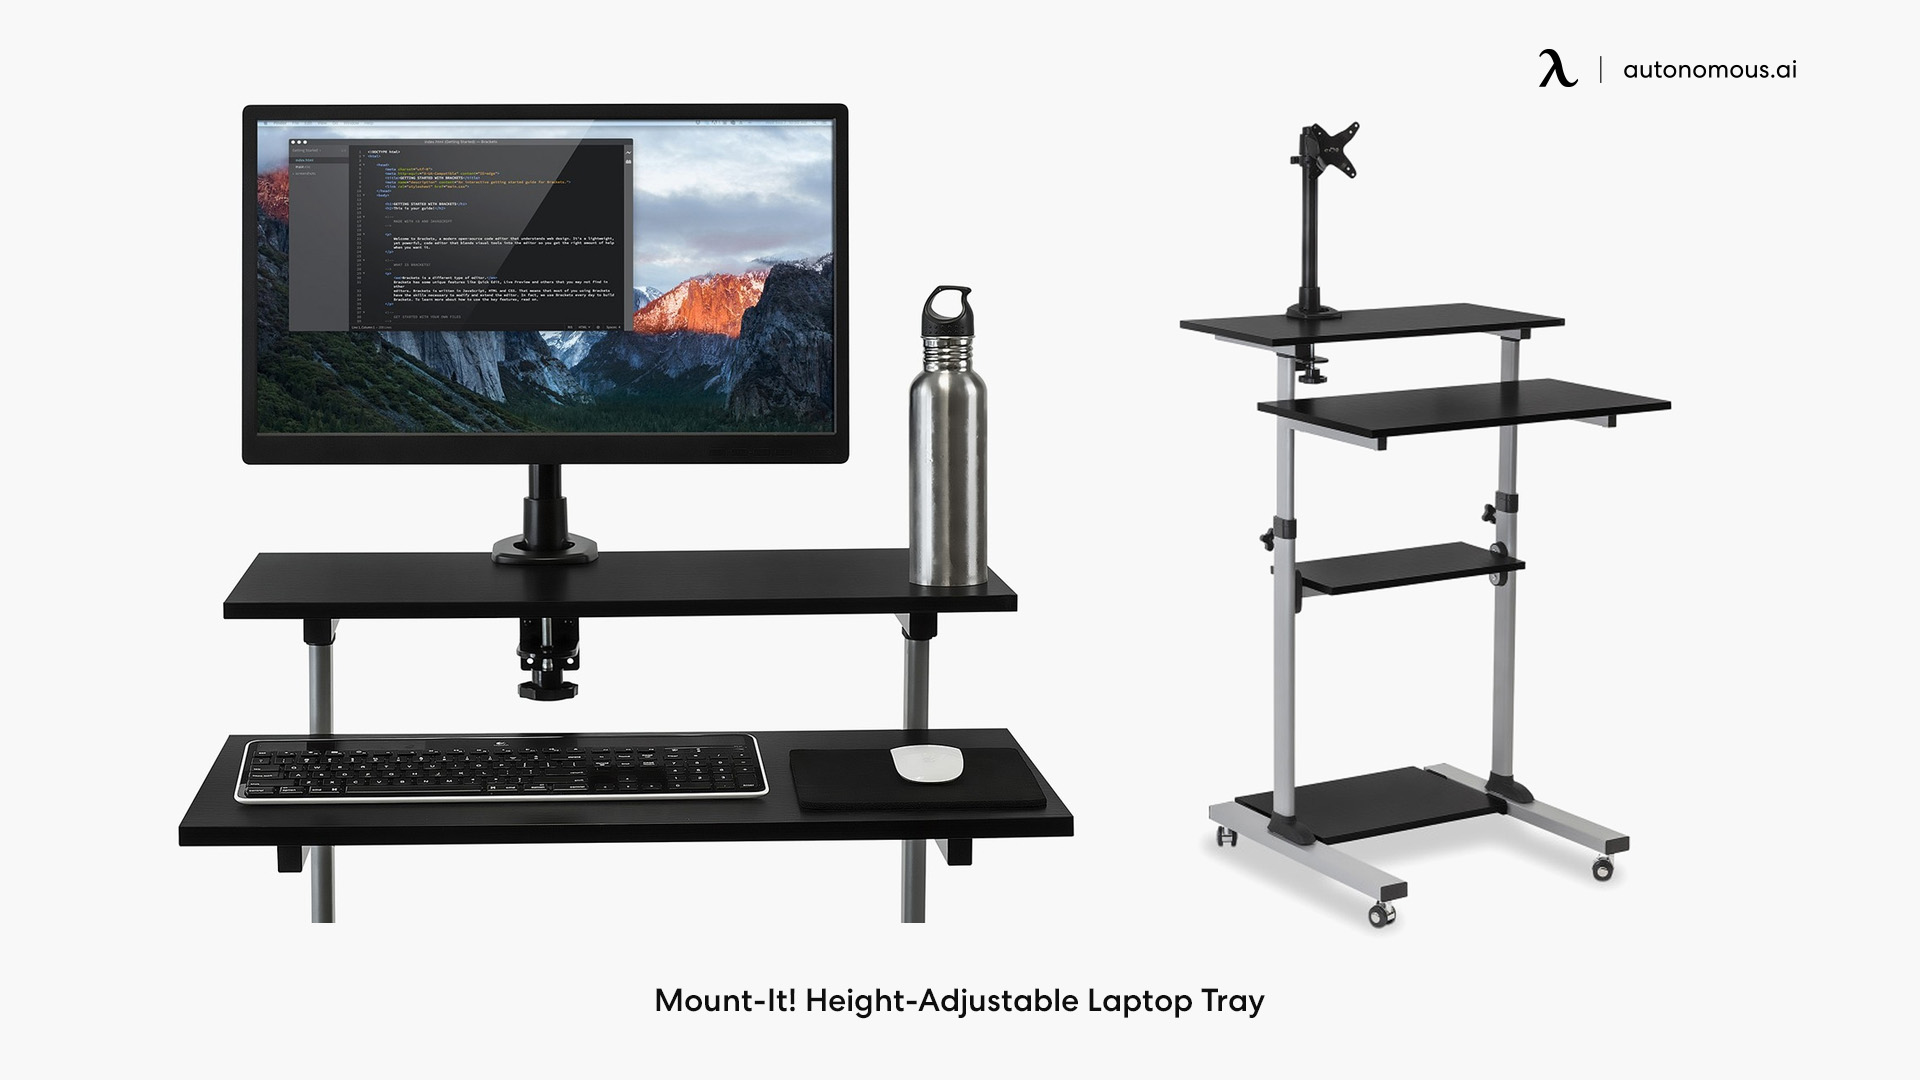 Mount-It! Height-Adjustable Laptop Tray